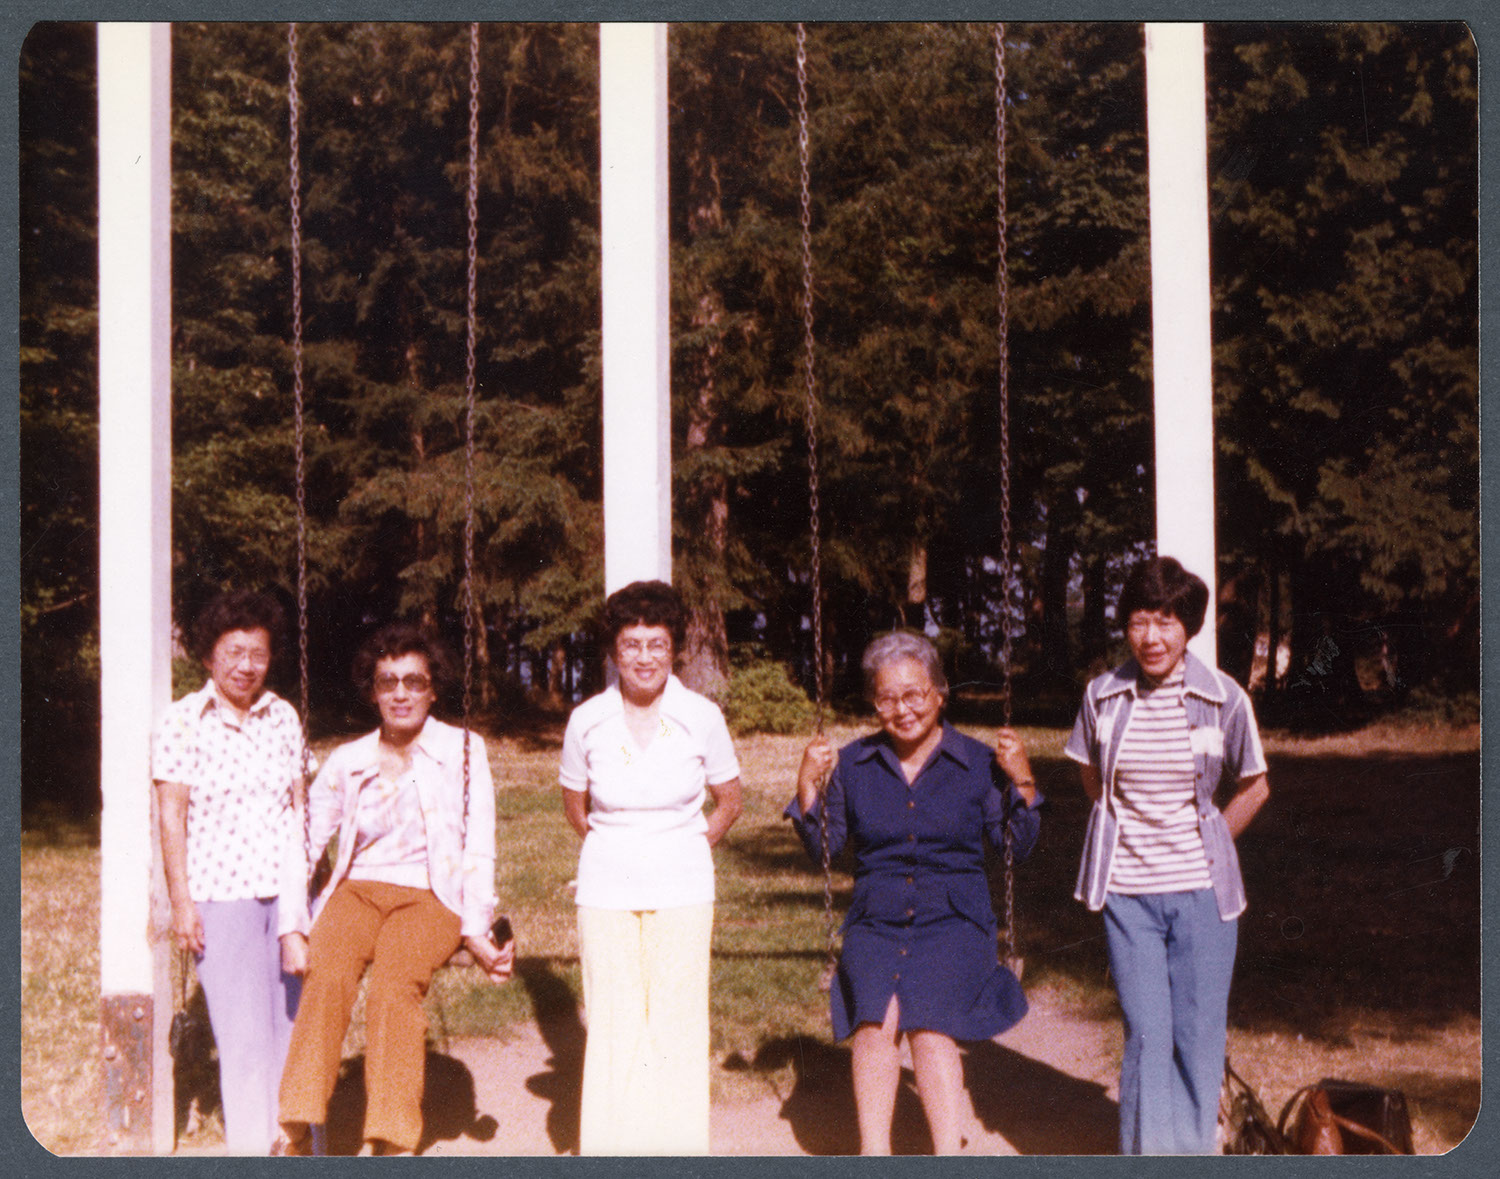 Camp Kwomais, July 29 - August 1, 1977